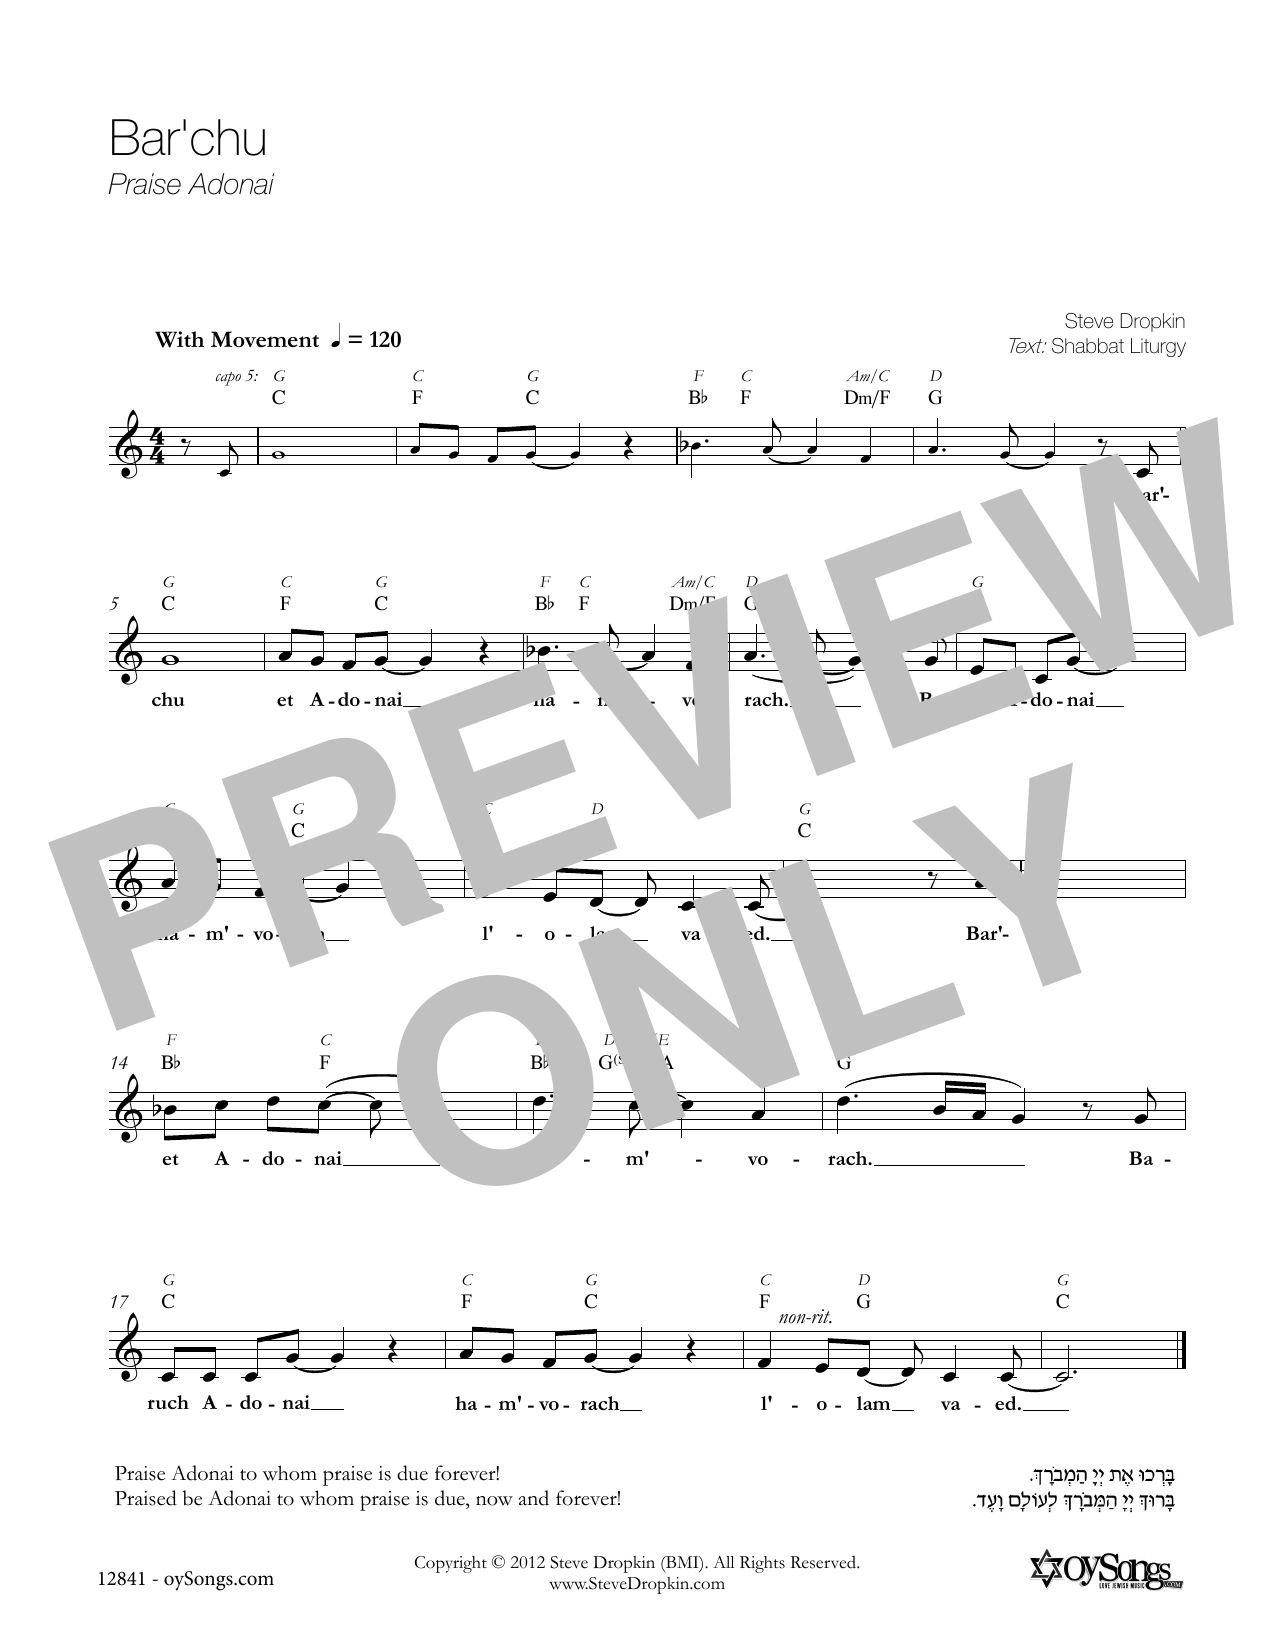 Steve Dropkin Bar'chu sheet music notes and chords arranged for Lead Sheet / Fake Book